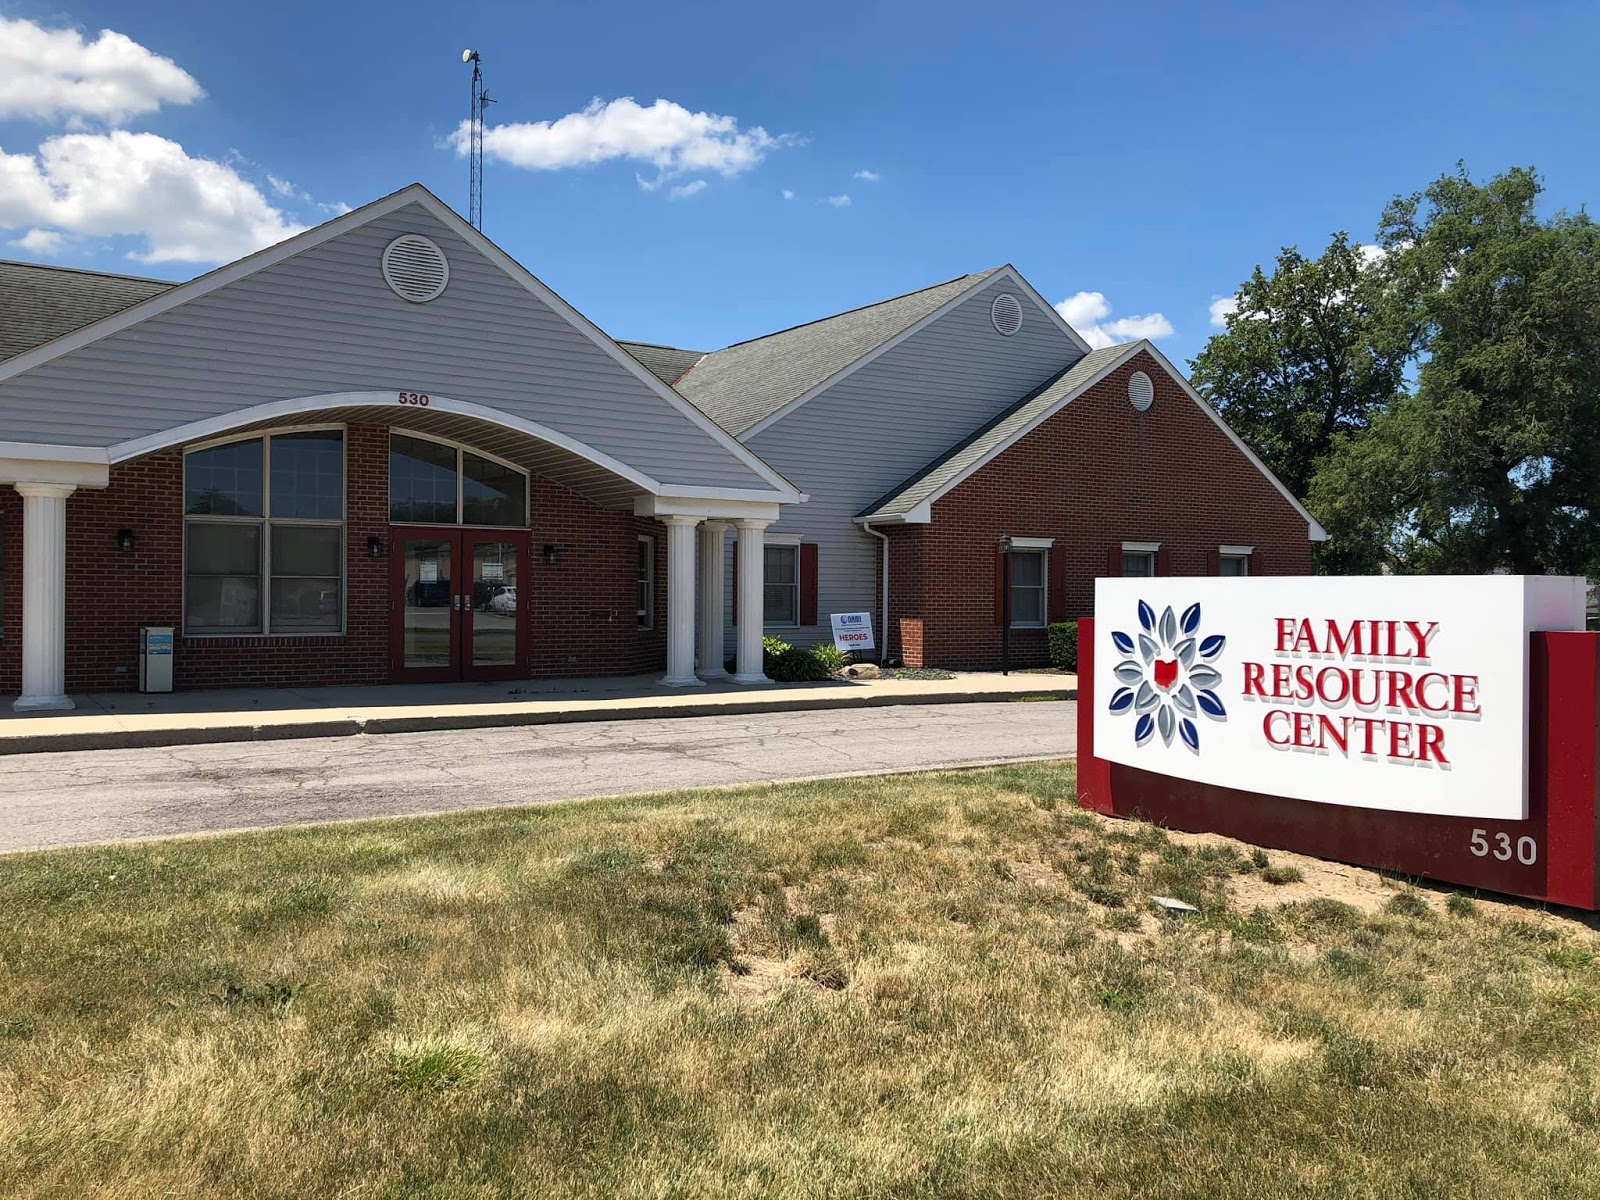 Family Resource Center of Northwest Ohio